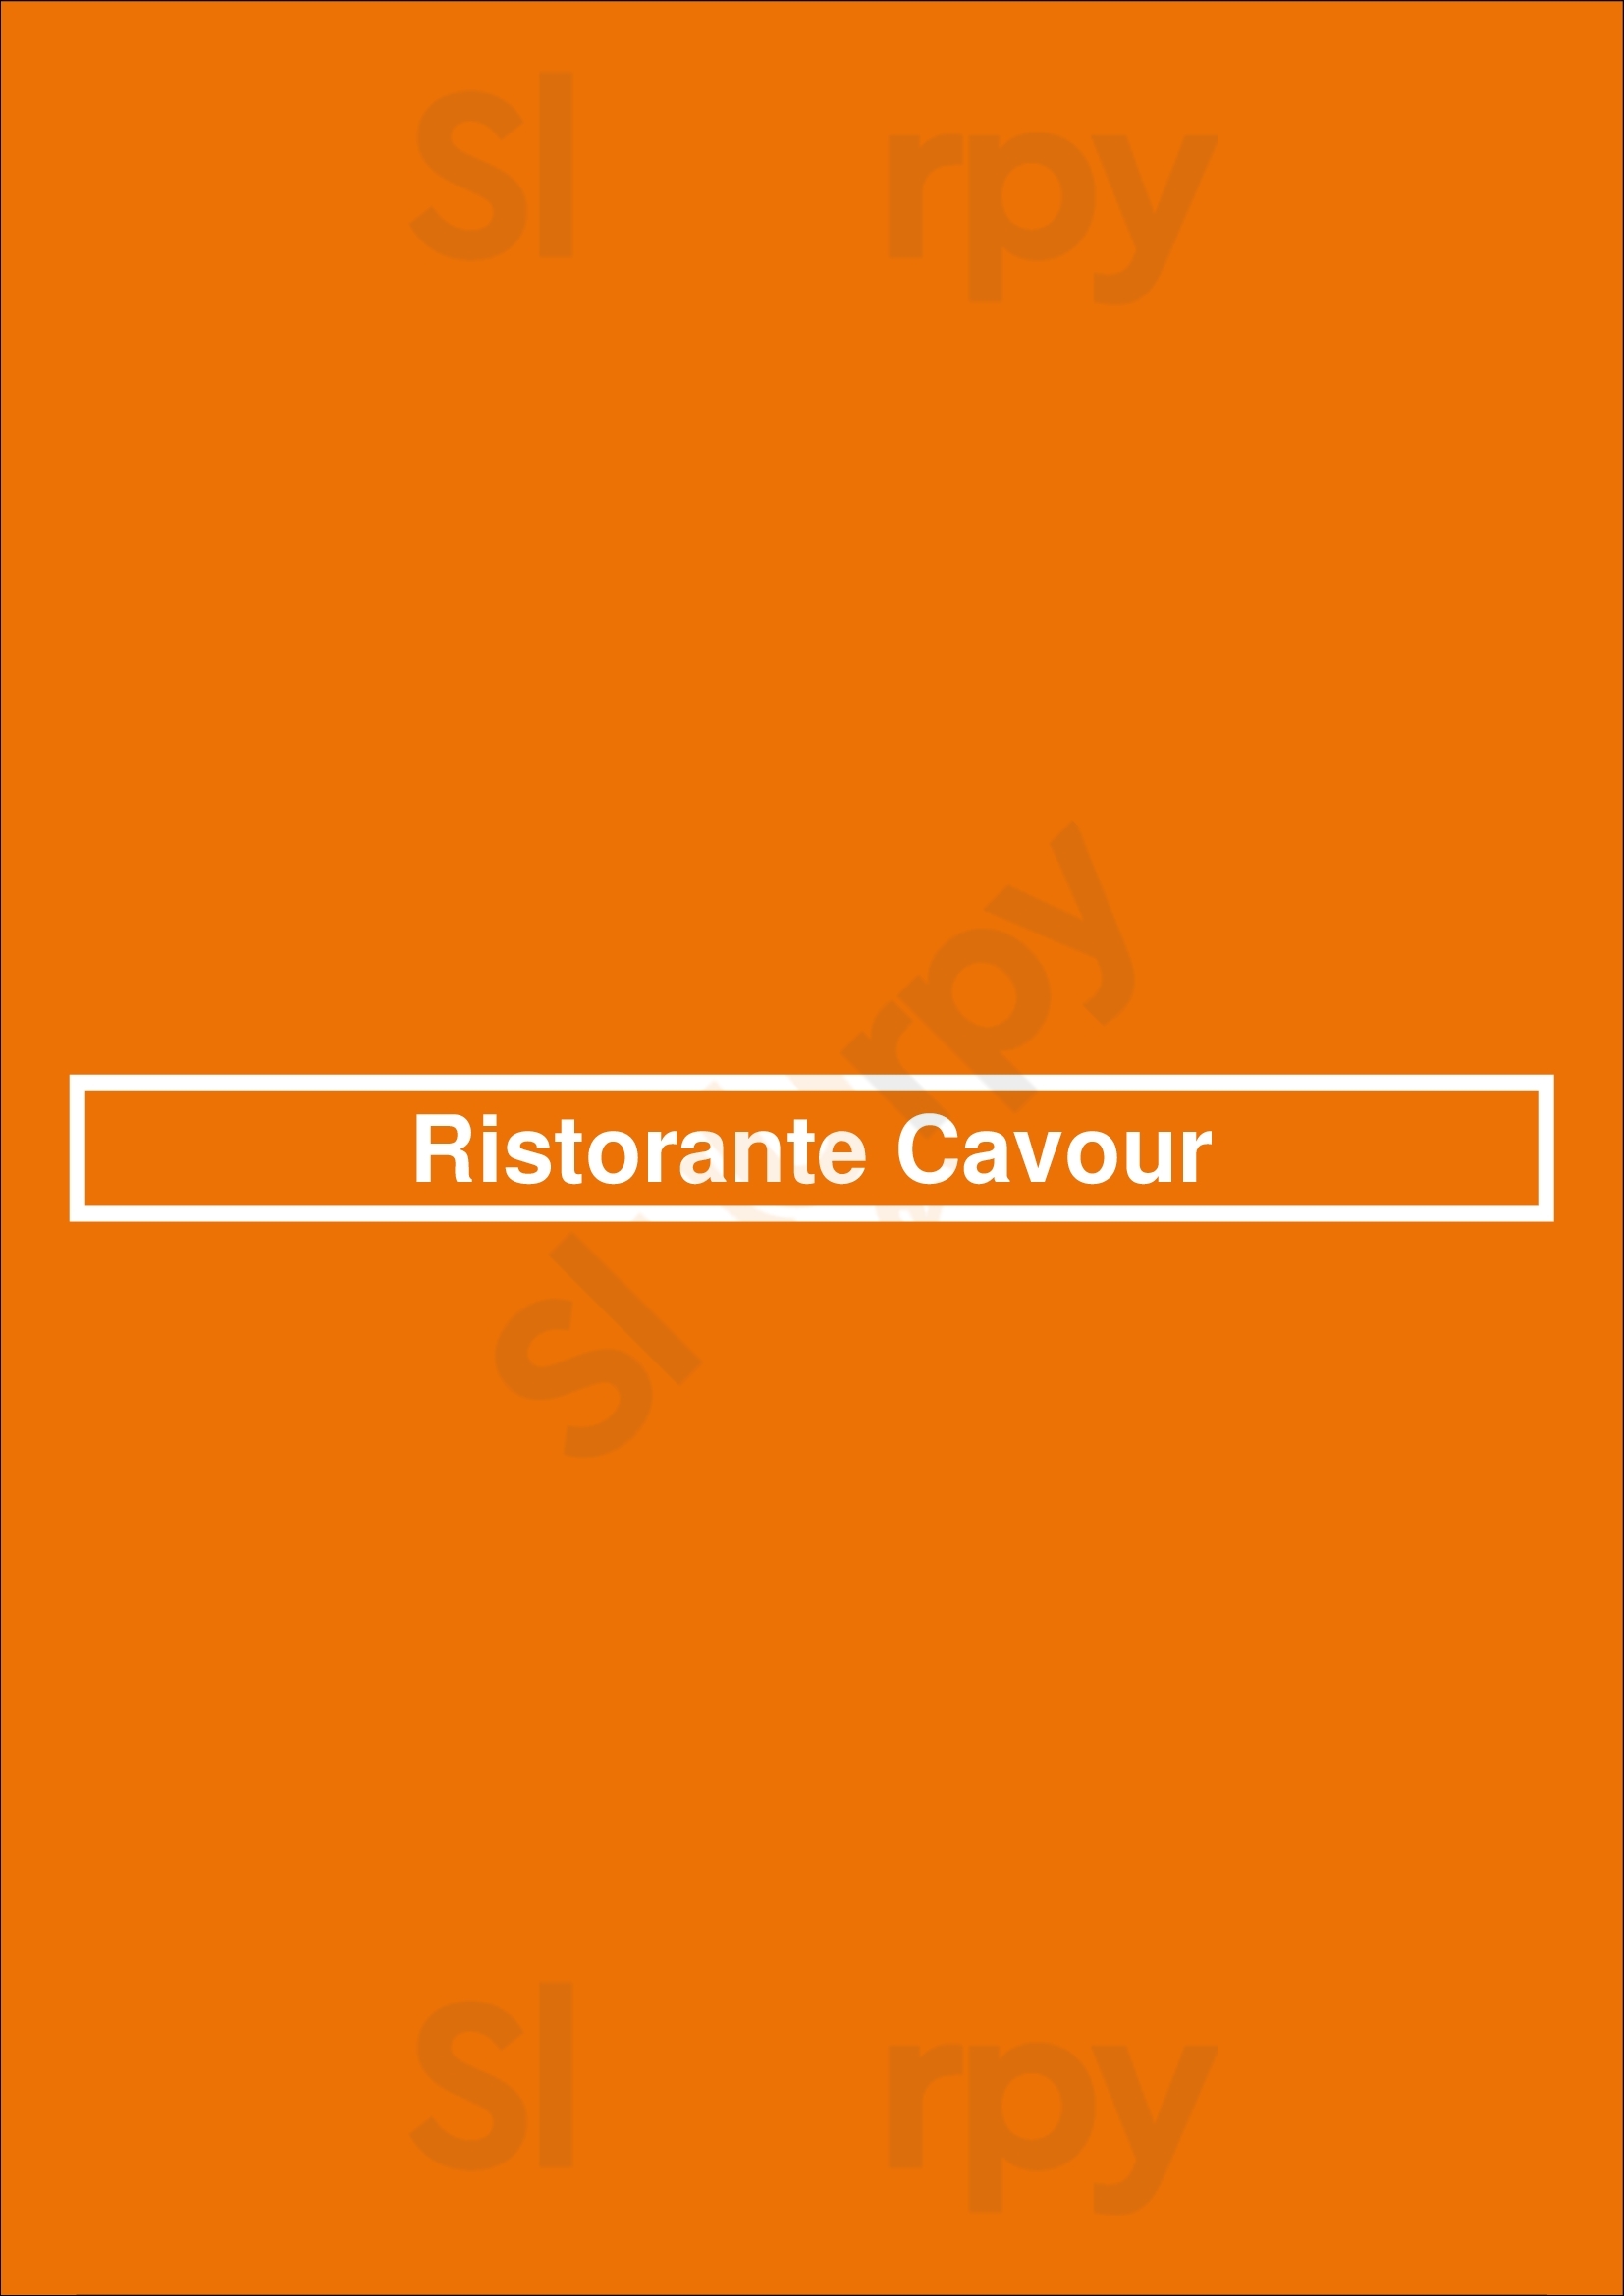 Ristorante Cavour Houston Menu - 1